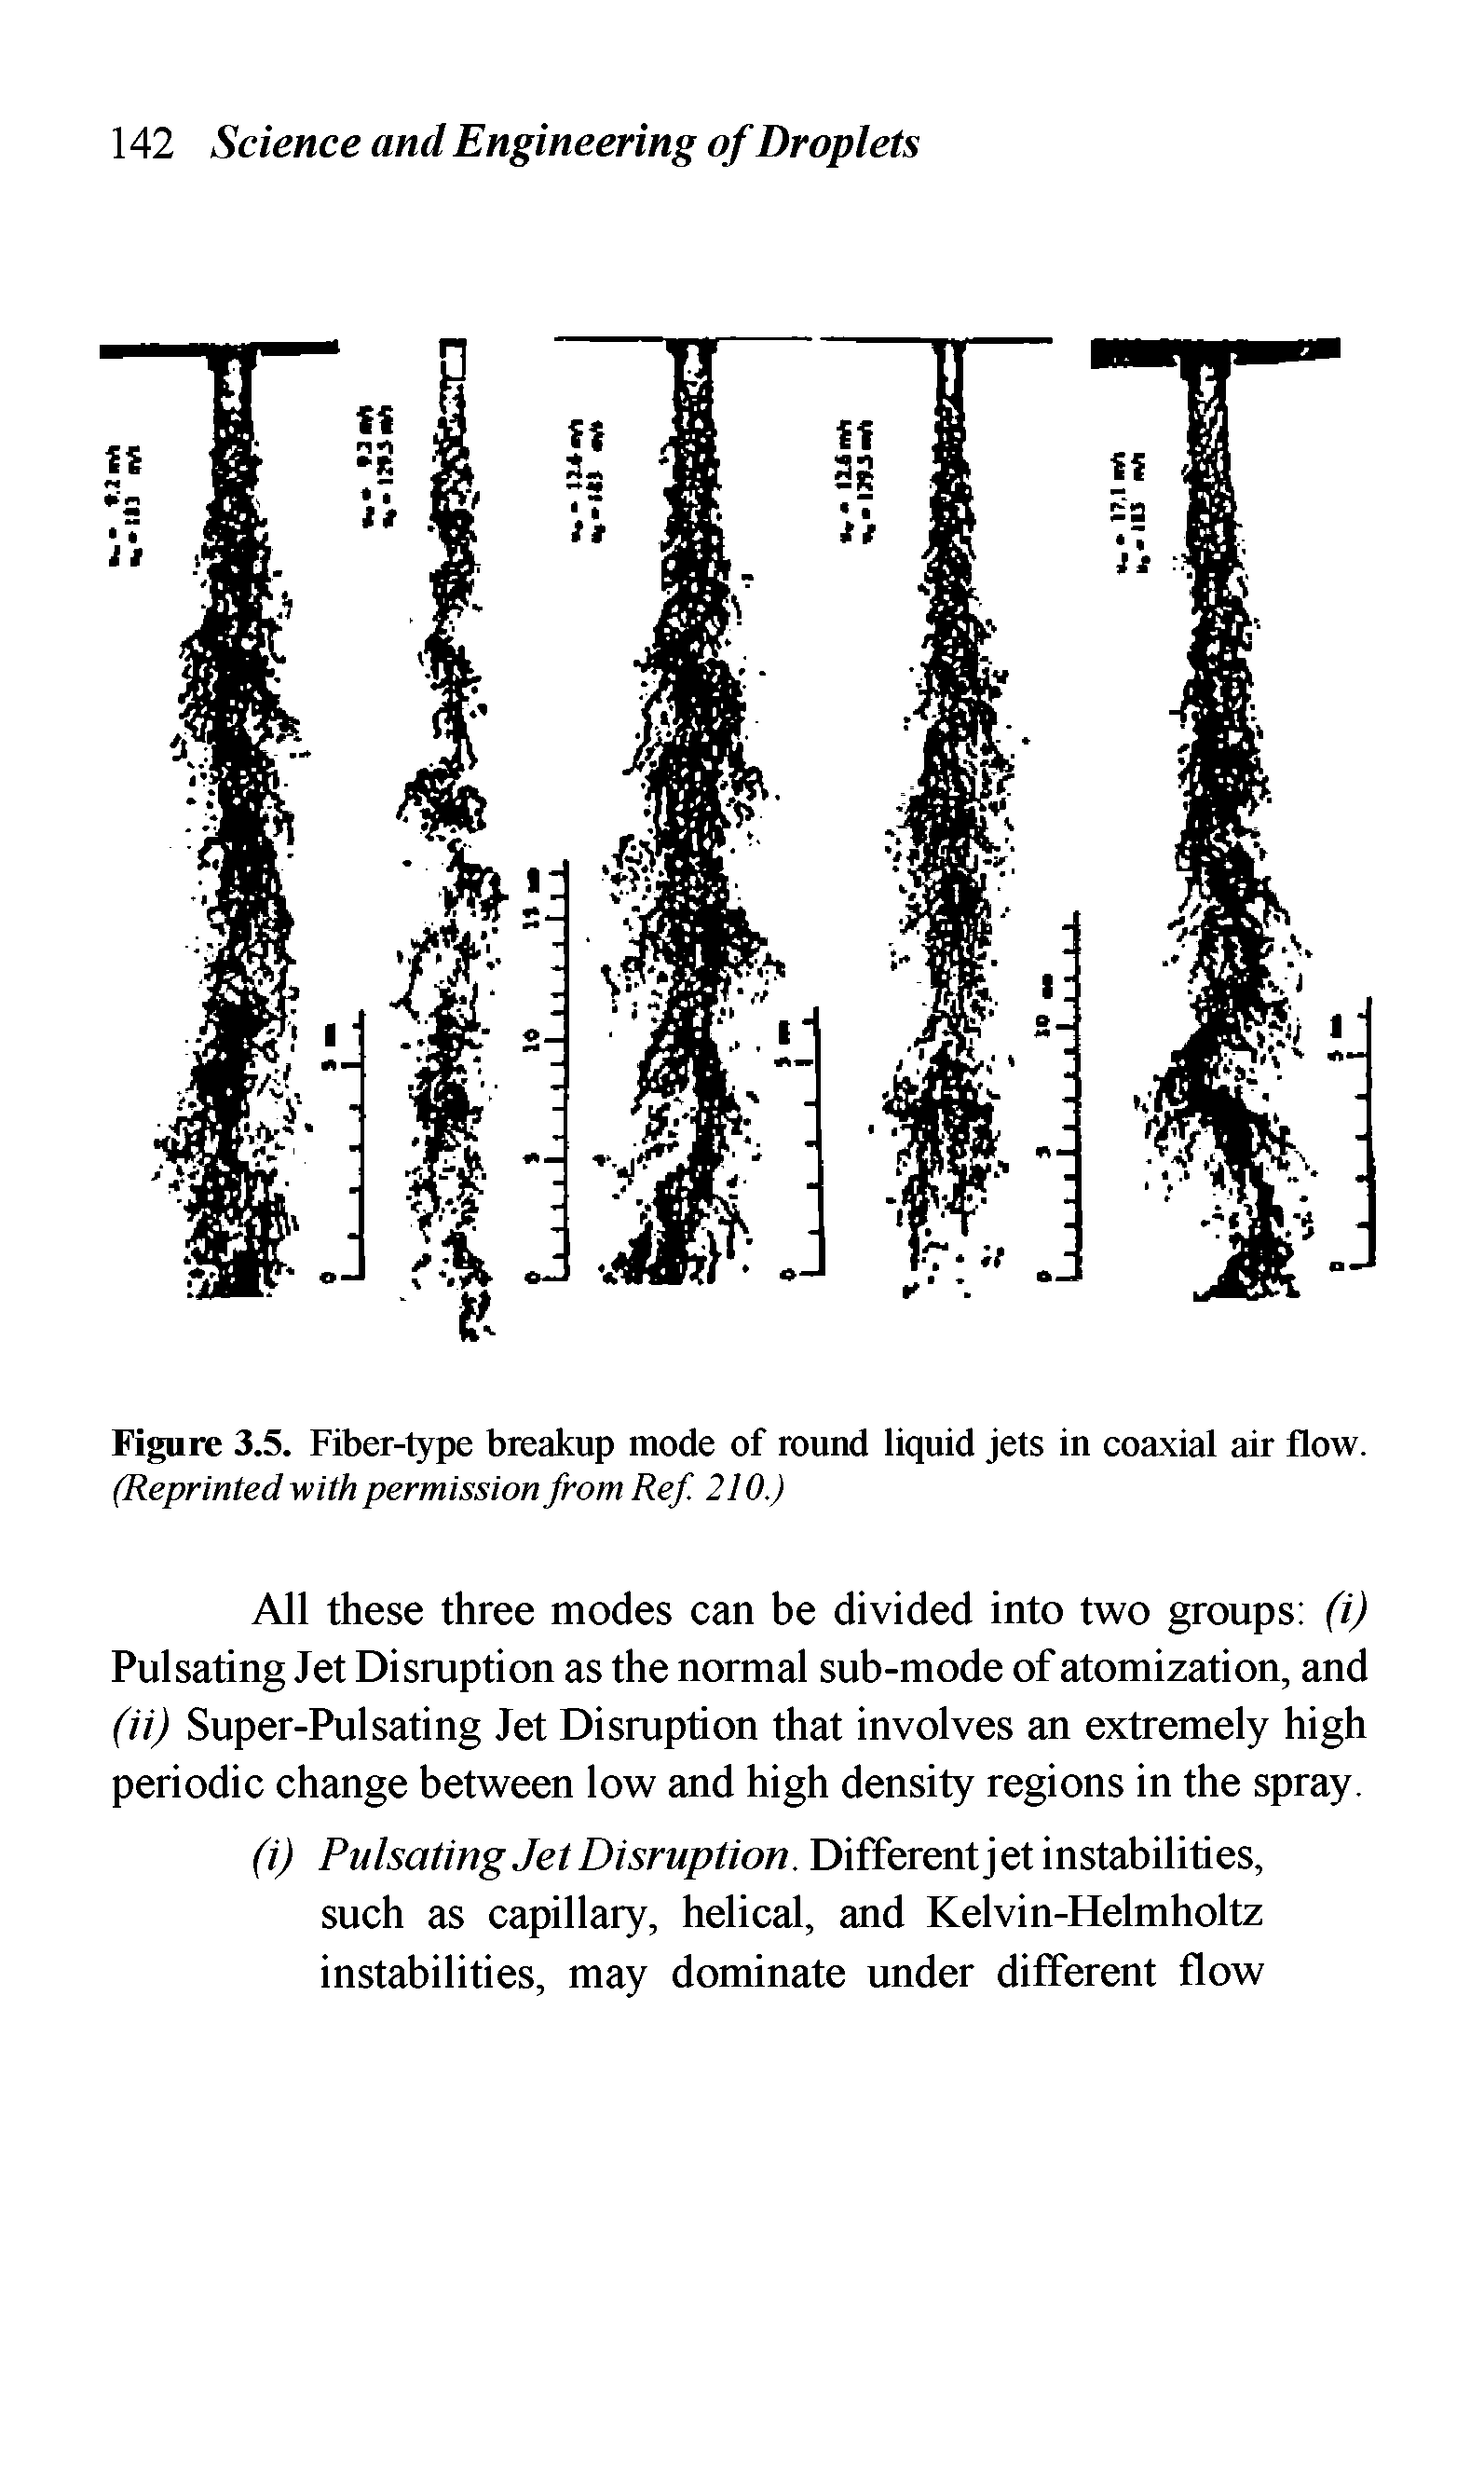 Figure 3.5. Fiber-type breakup mode of round liquid jets in coaxial air flow.